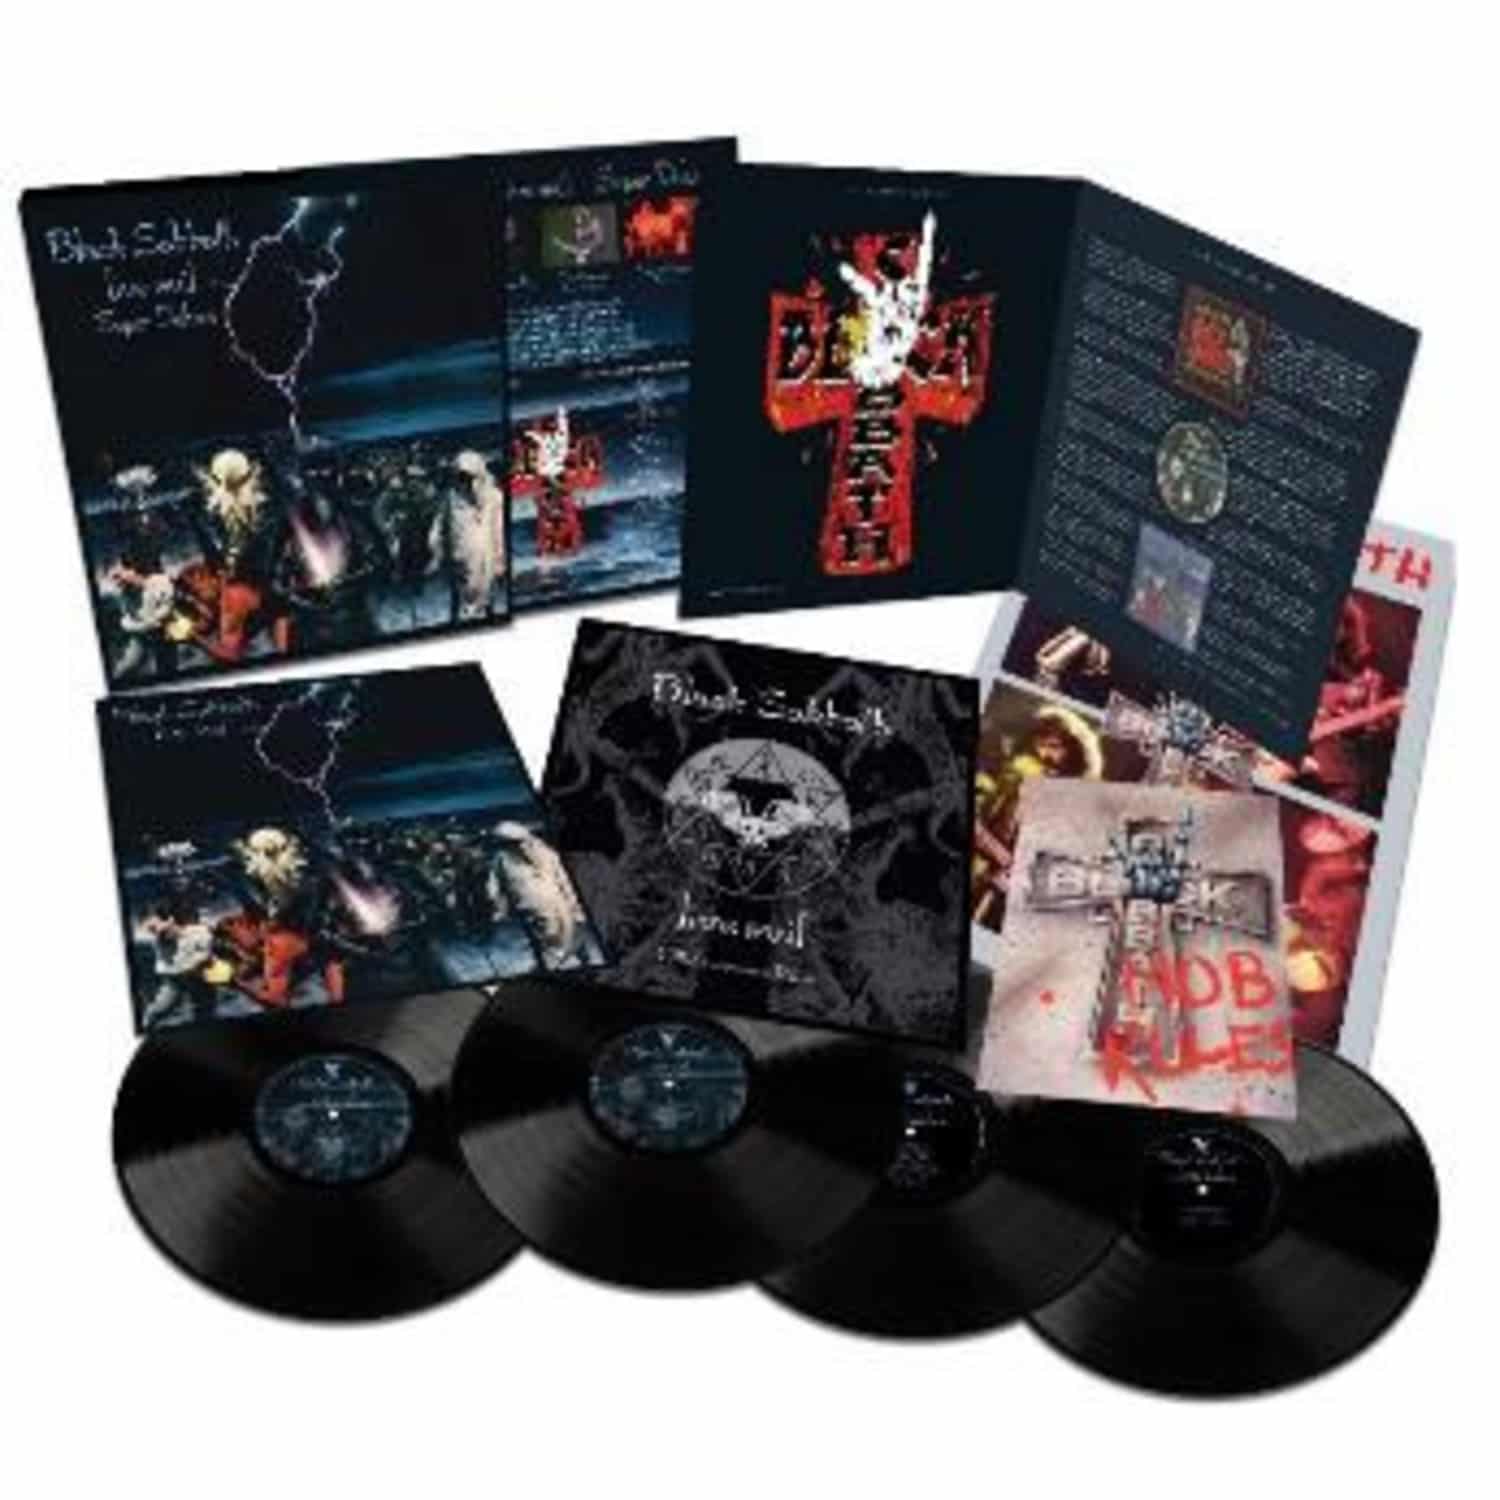 Black Sabbath - LIVE EVIL 